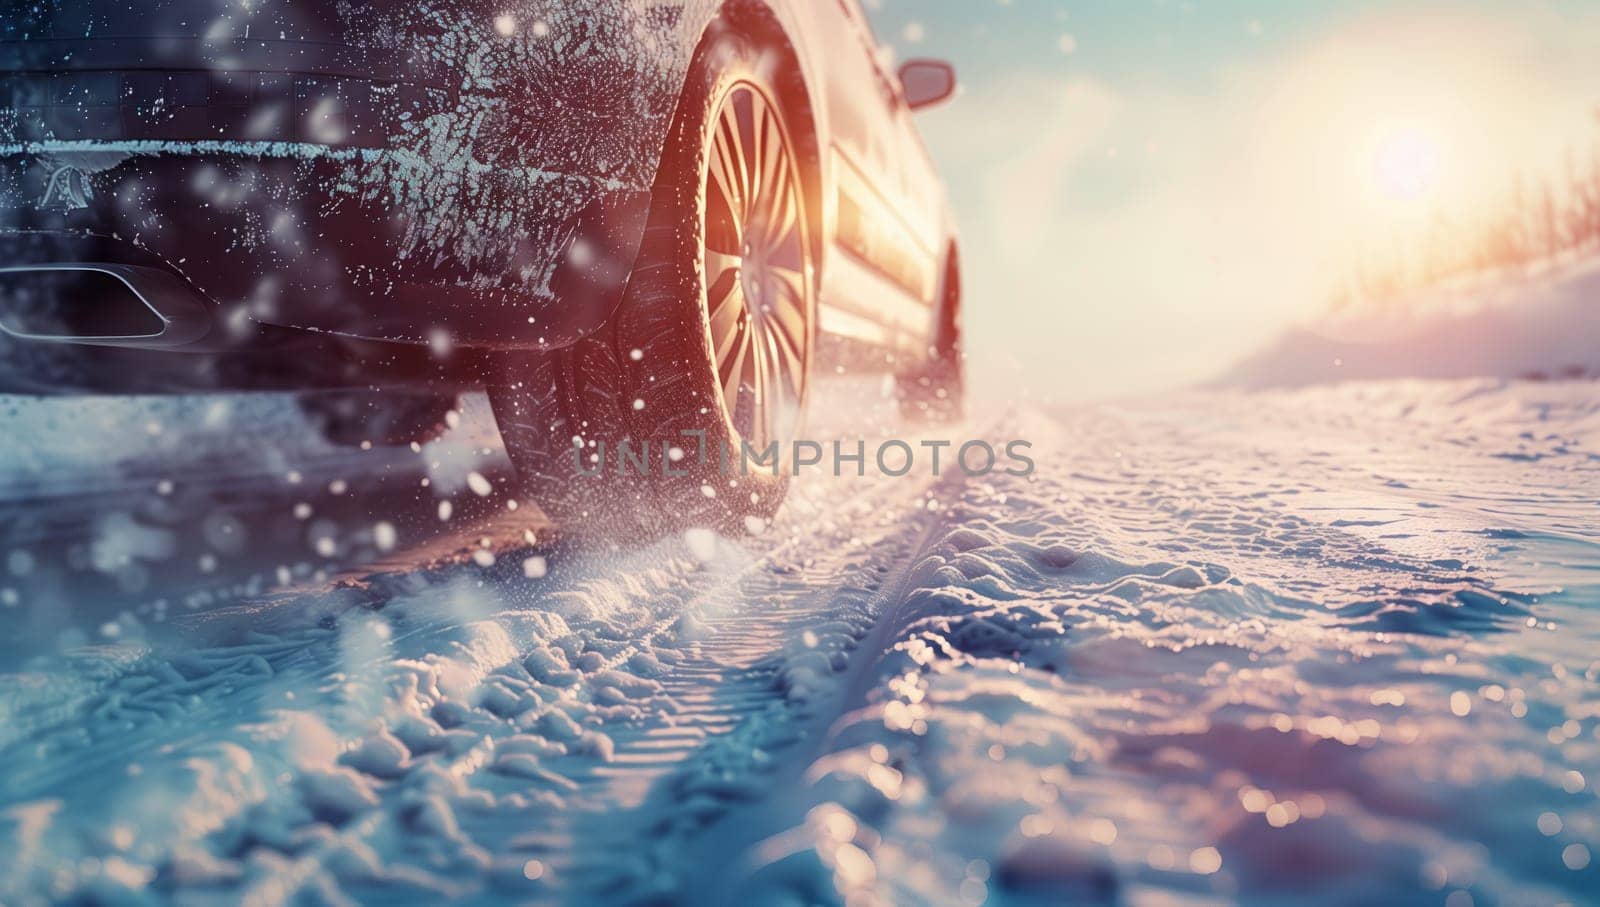 Automotive tire gliding on snowy road through freezing landscape by richwolf